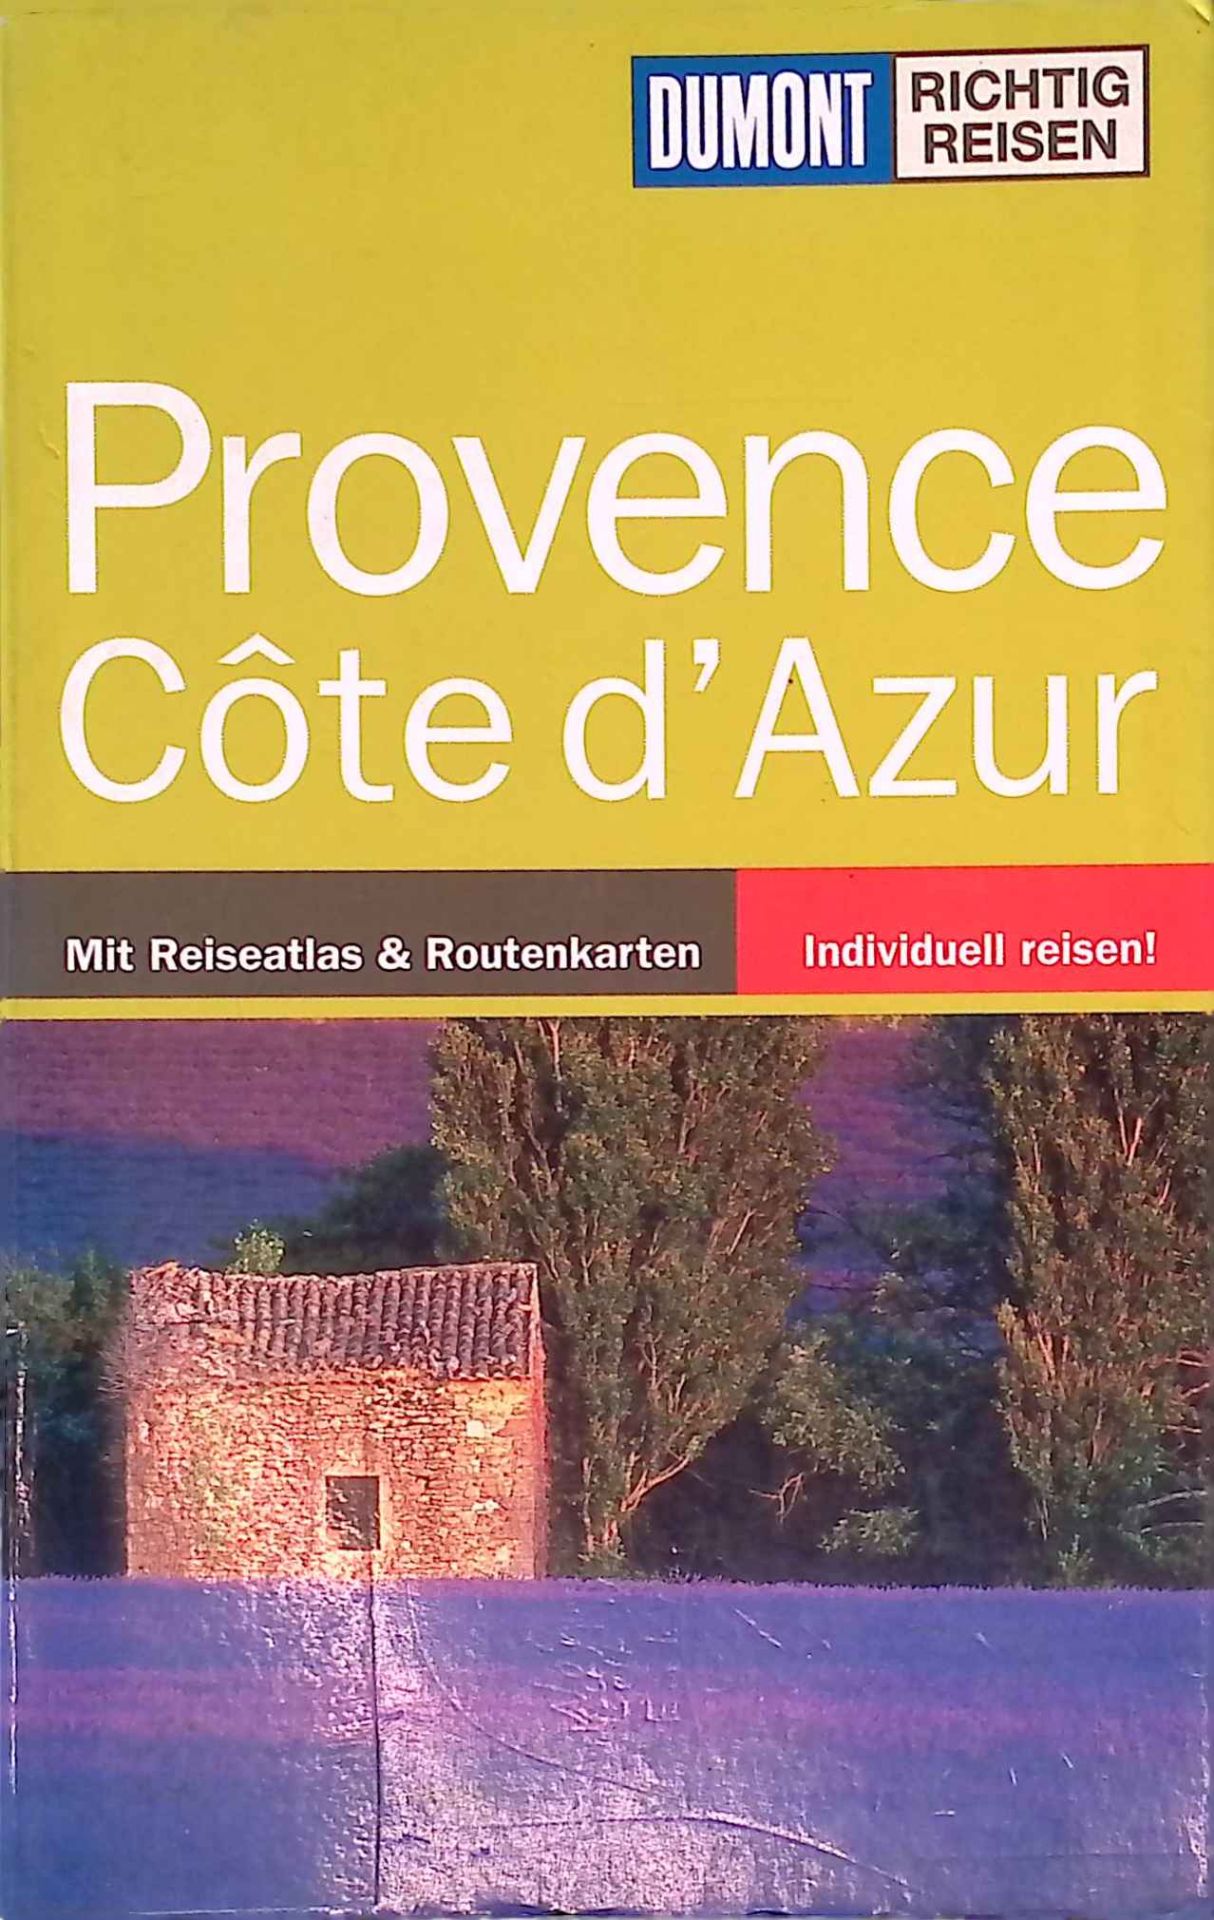 Provence, Côte d'Azur : mit Reiseatlas & Routenkarten ; individuell reisen!. DuMont richtig reisen - Simon, Klaus